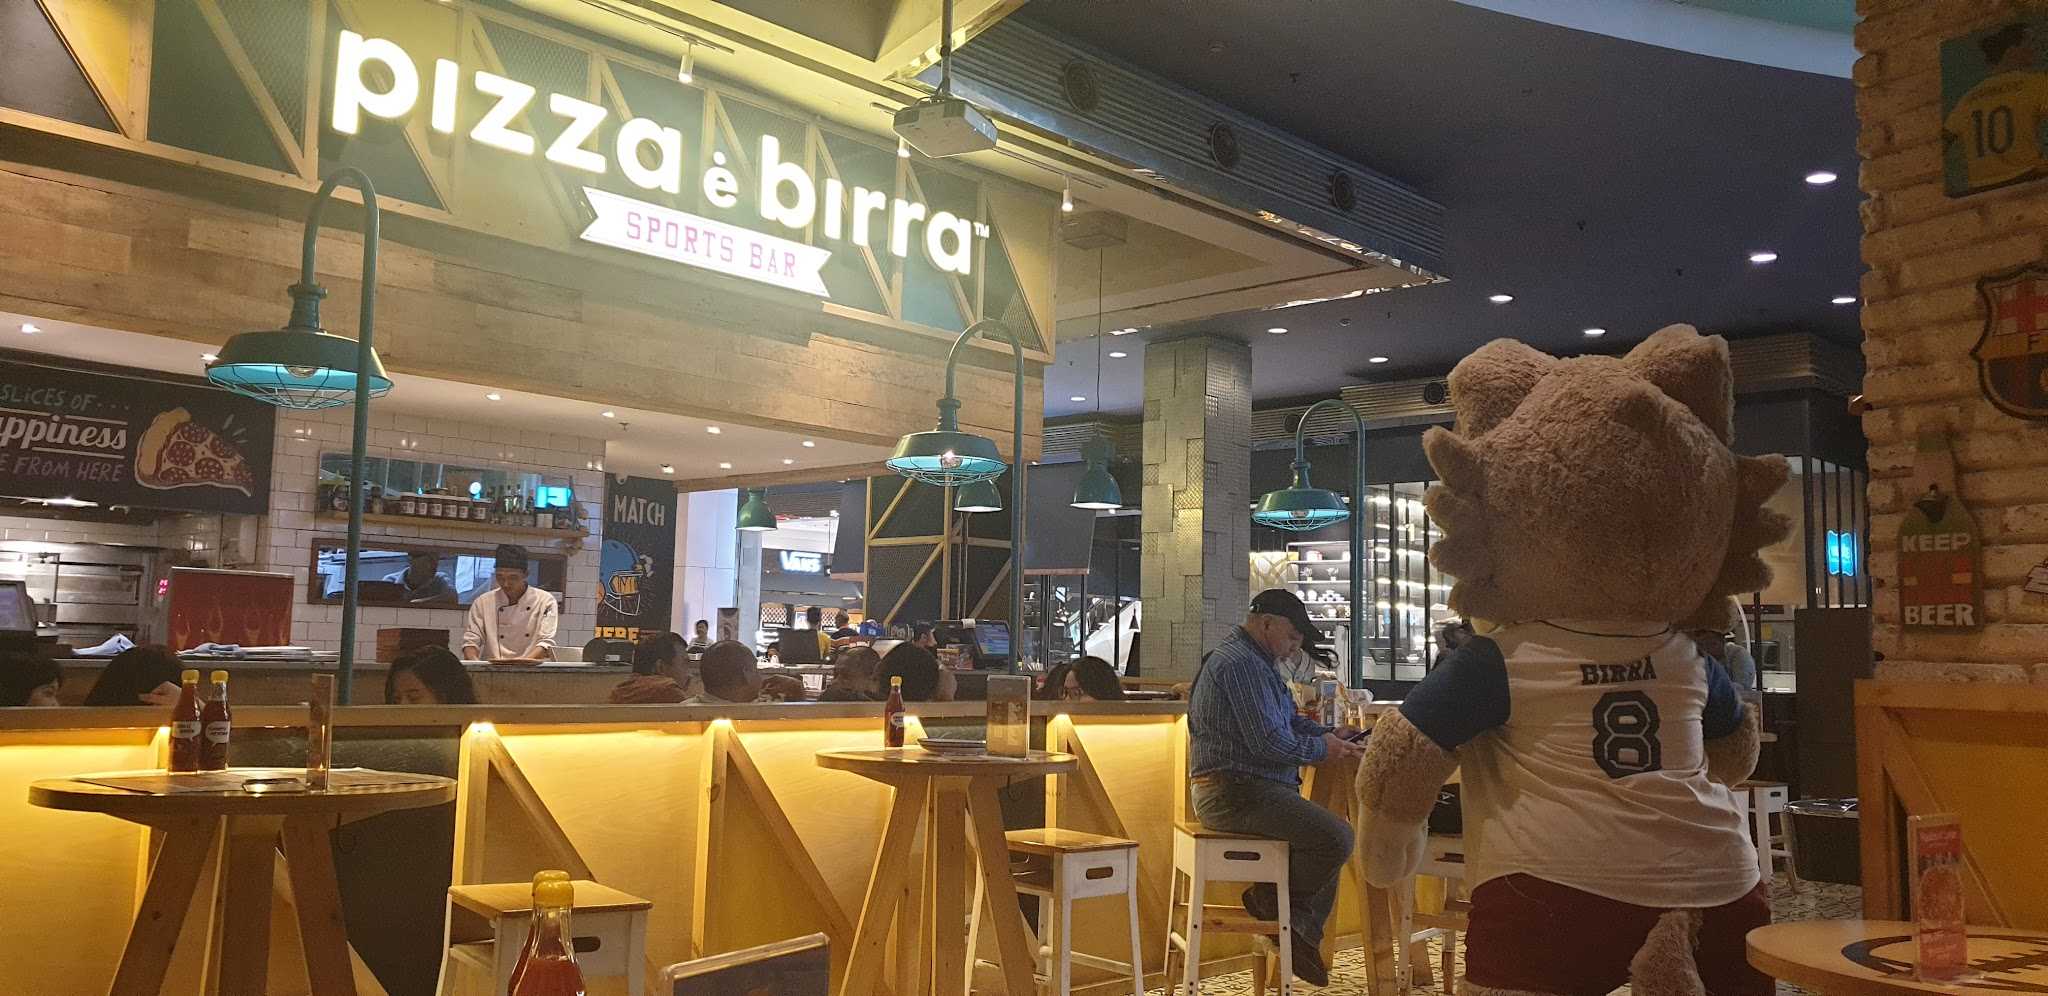 Pizza ė Birra Sports Bar - Gandaria City Mall 1